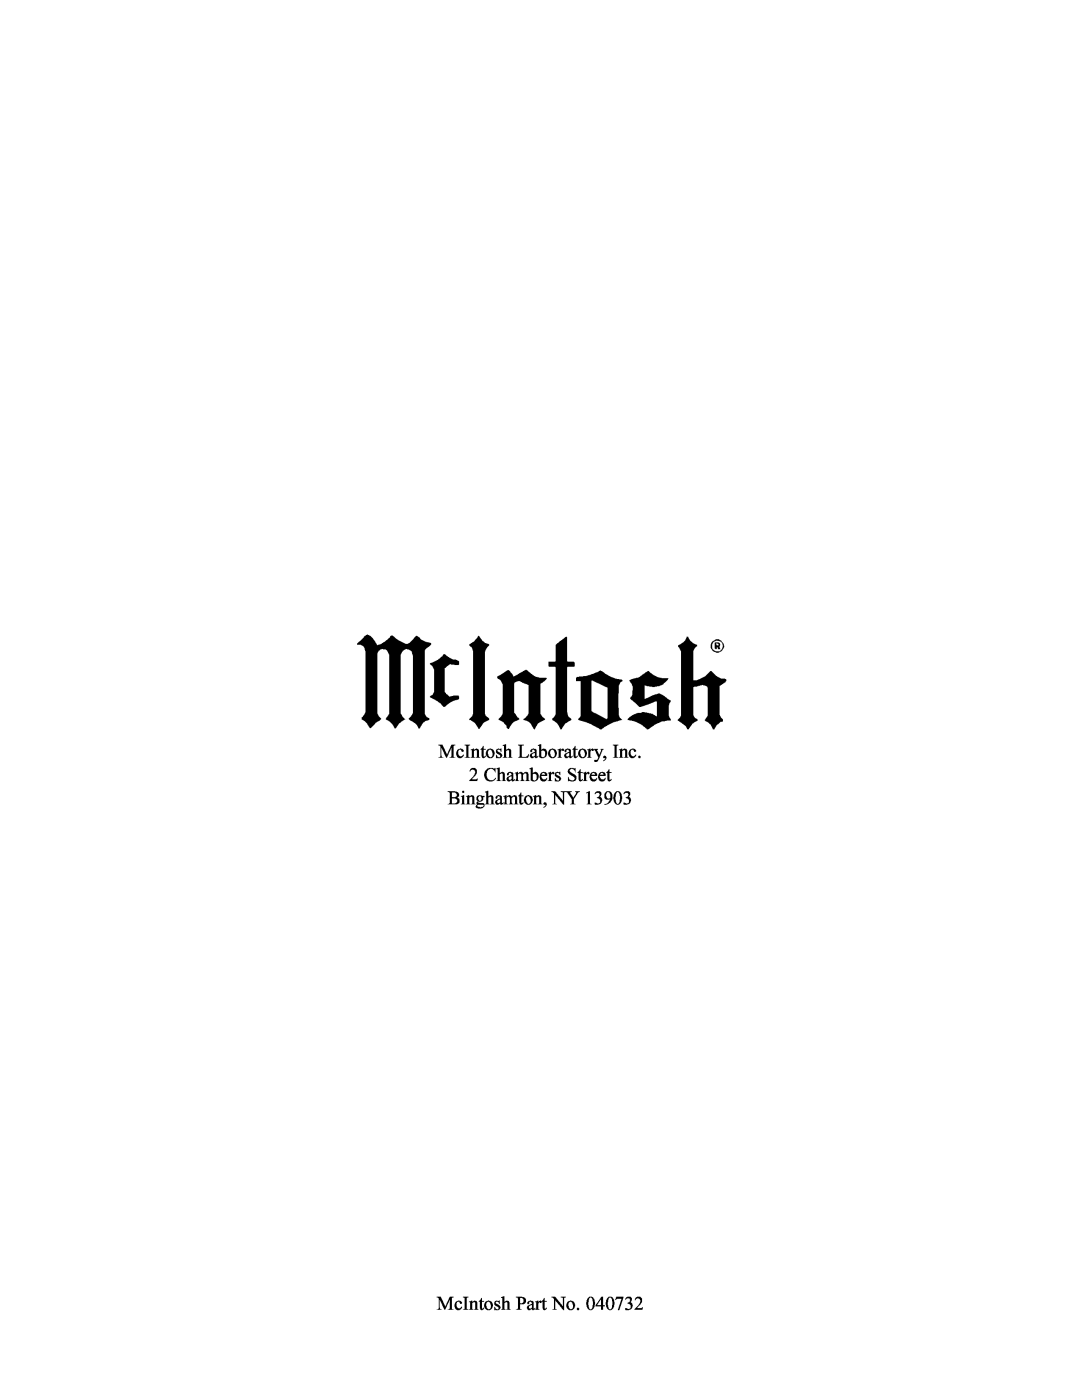 McIntosh C200 manual McIntosh Laboratory, Inc 2 Chambers Street Binghamton, NY, McIntosh Part No 